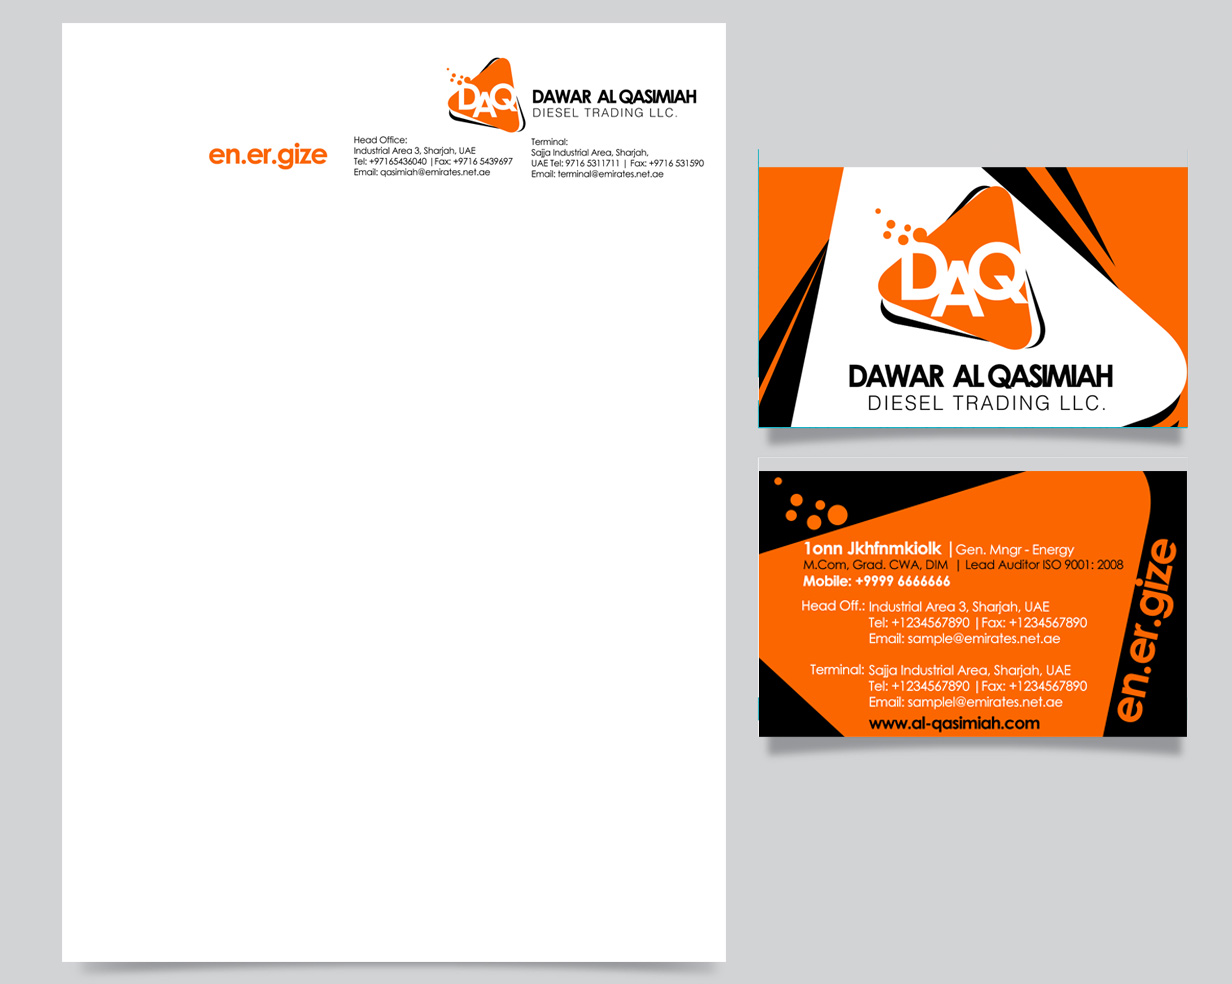 Contemporary & Impactful Business Cards & Letterhead Designs